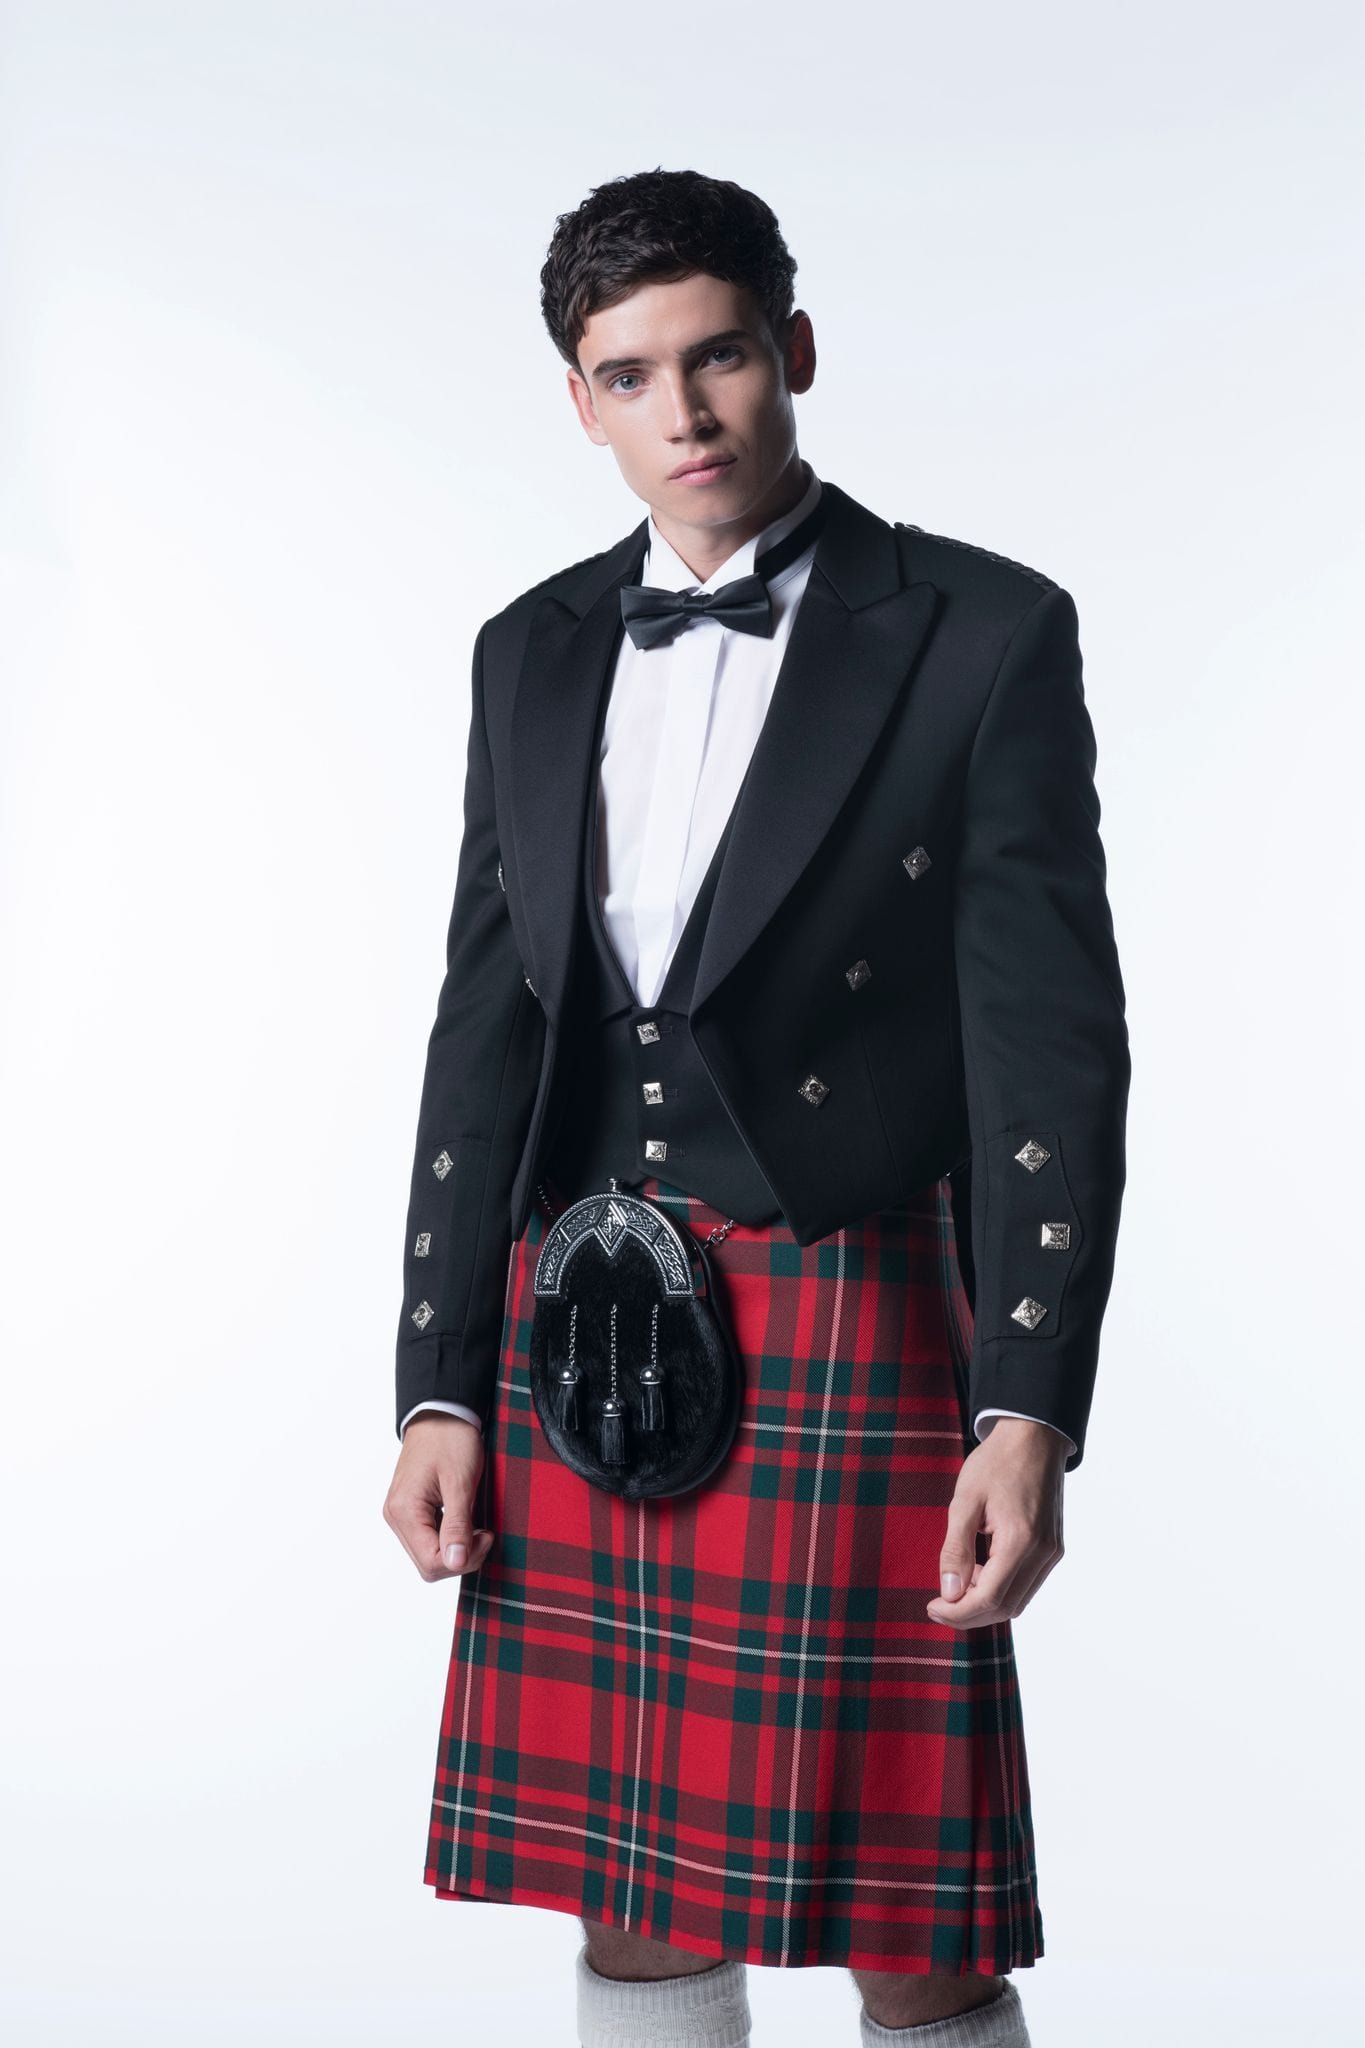 Prince Charlie Kilt Jacket and Vest - MacGregor and MacDuff